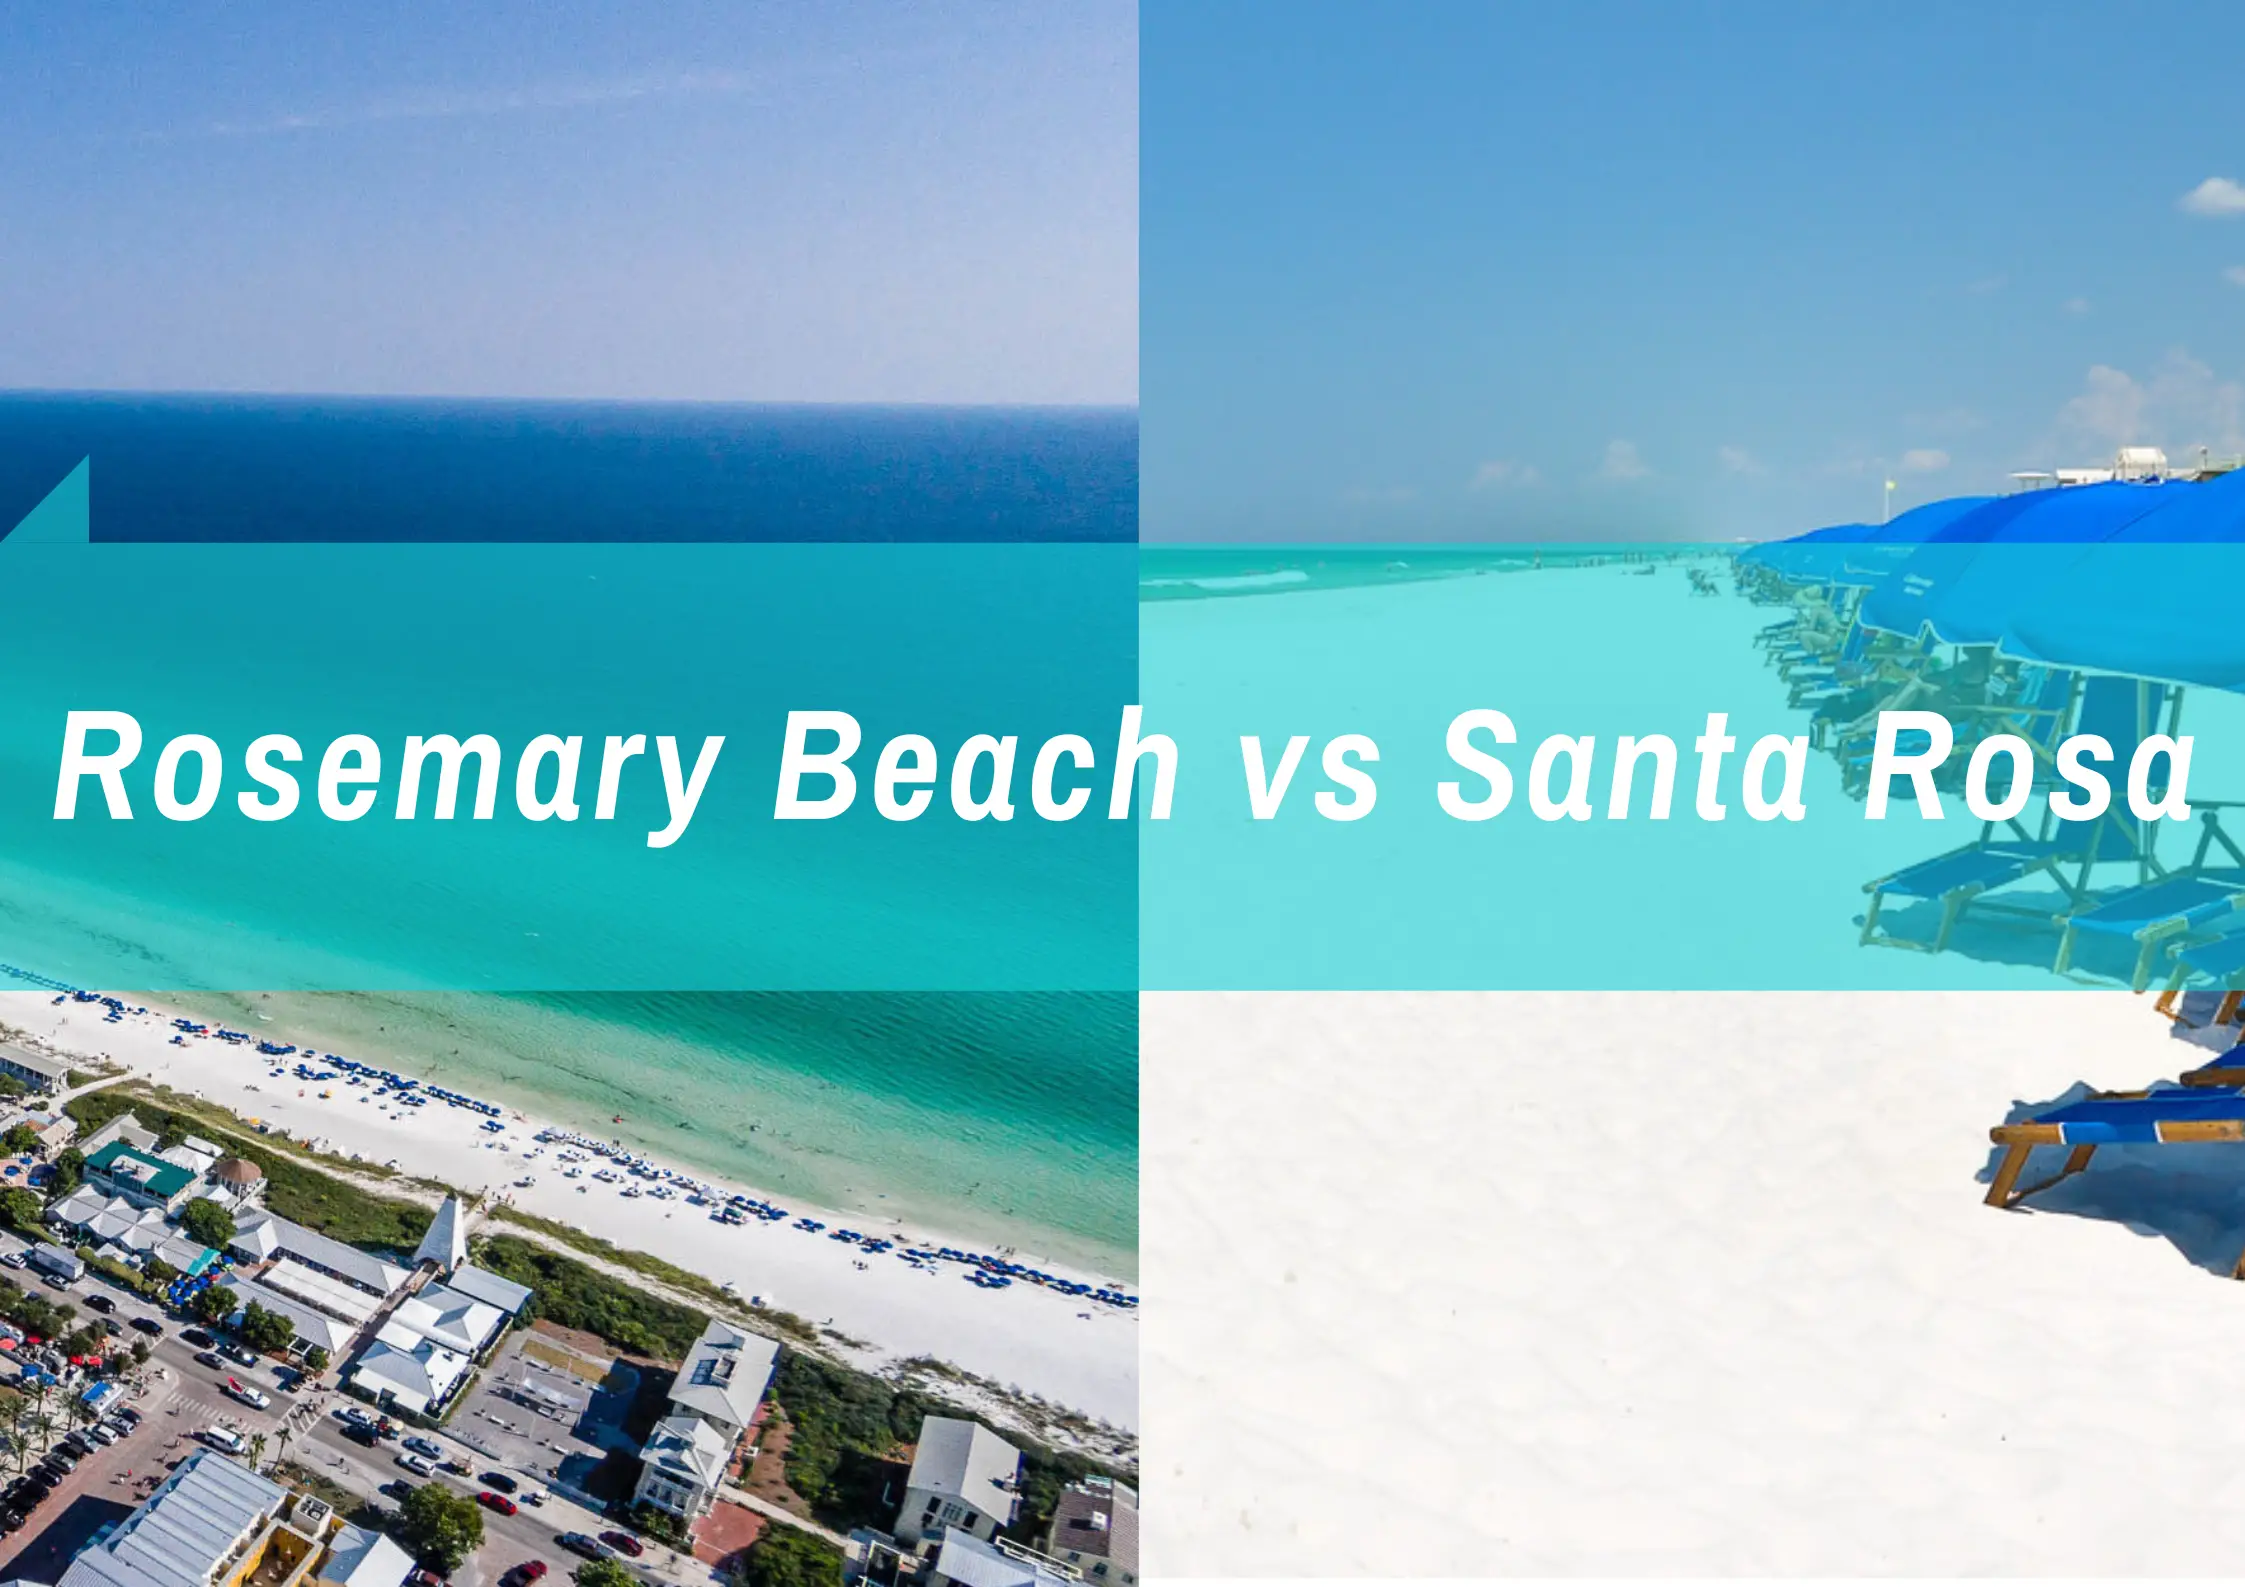 What beach is better: Rosemary Beach vs Santa Rosa?